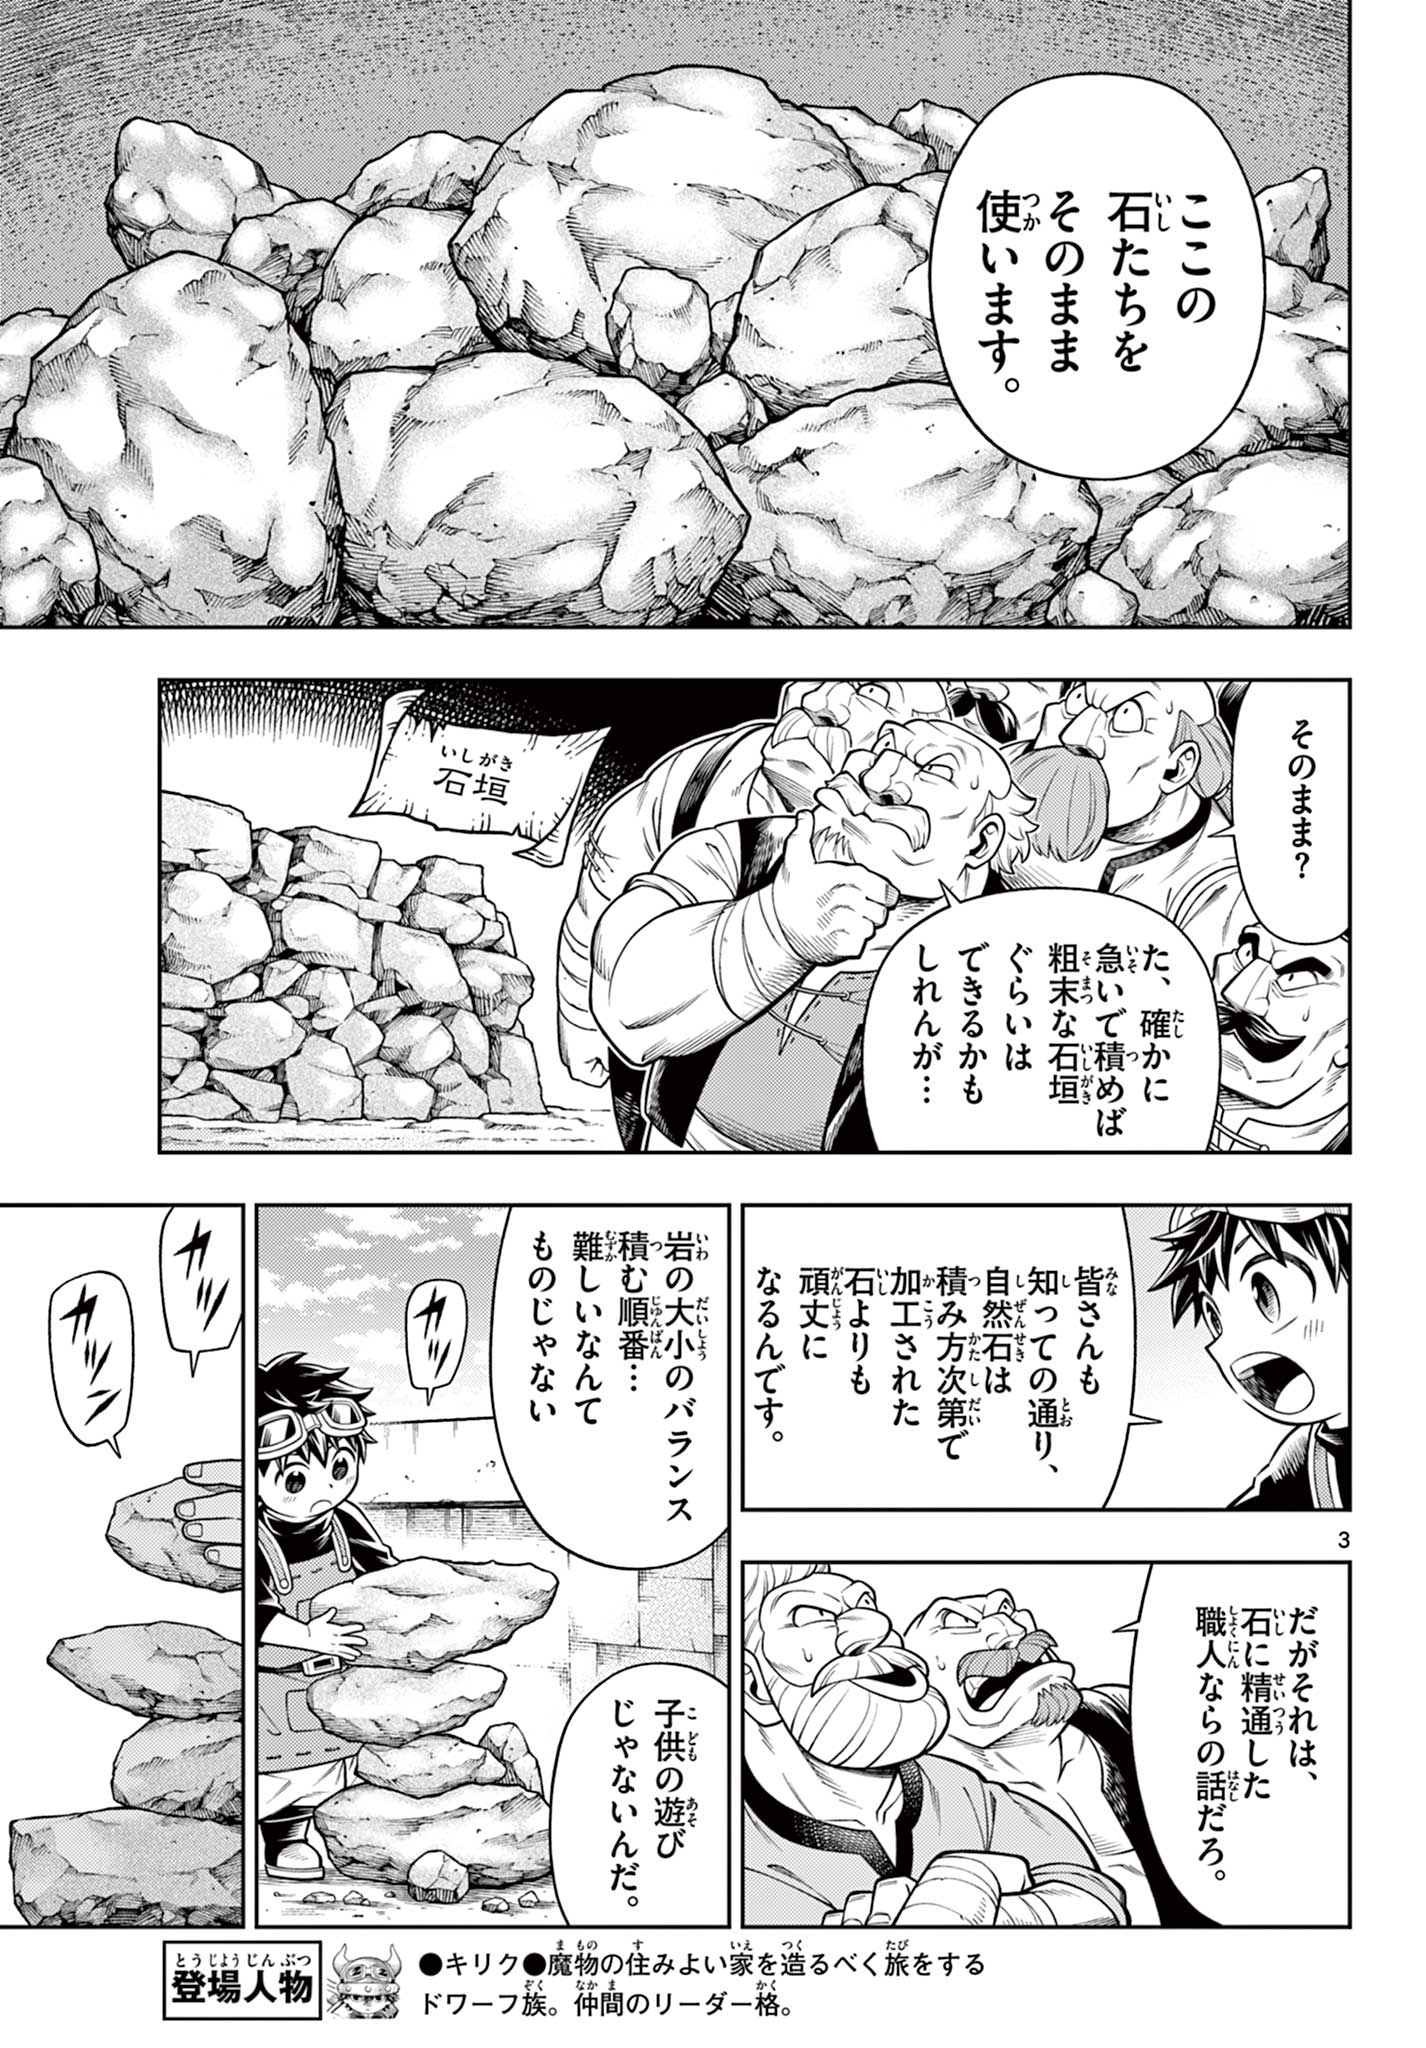 Soara to Mamono no ie - Chapter 27 - Page 3